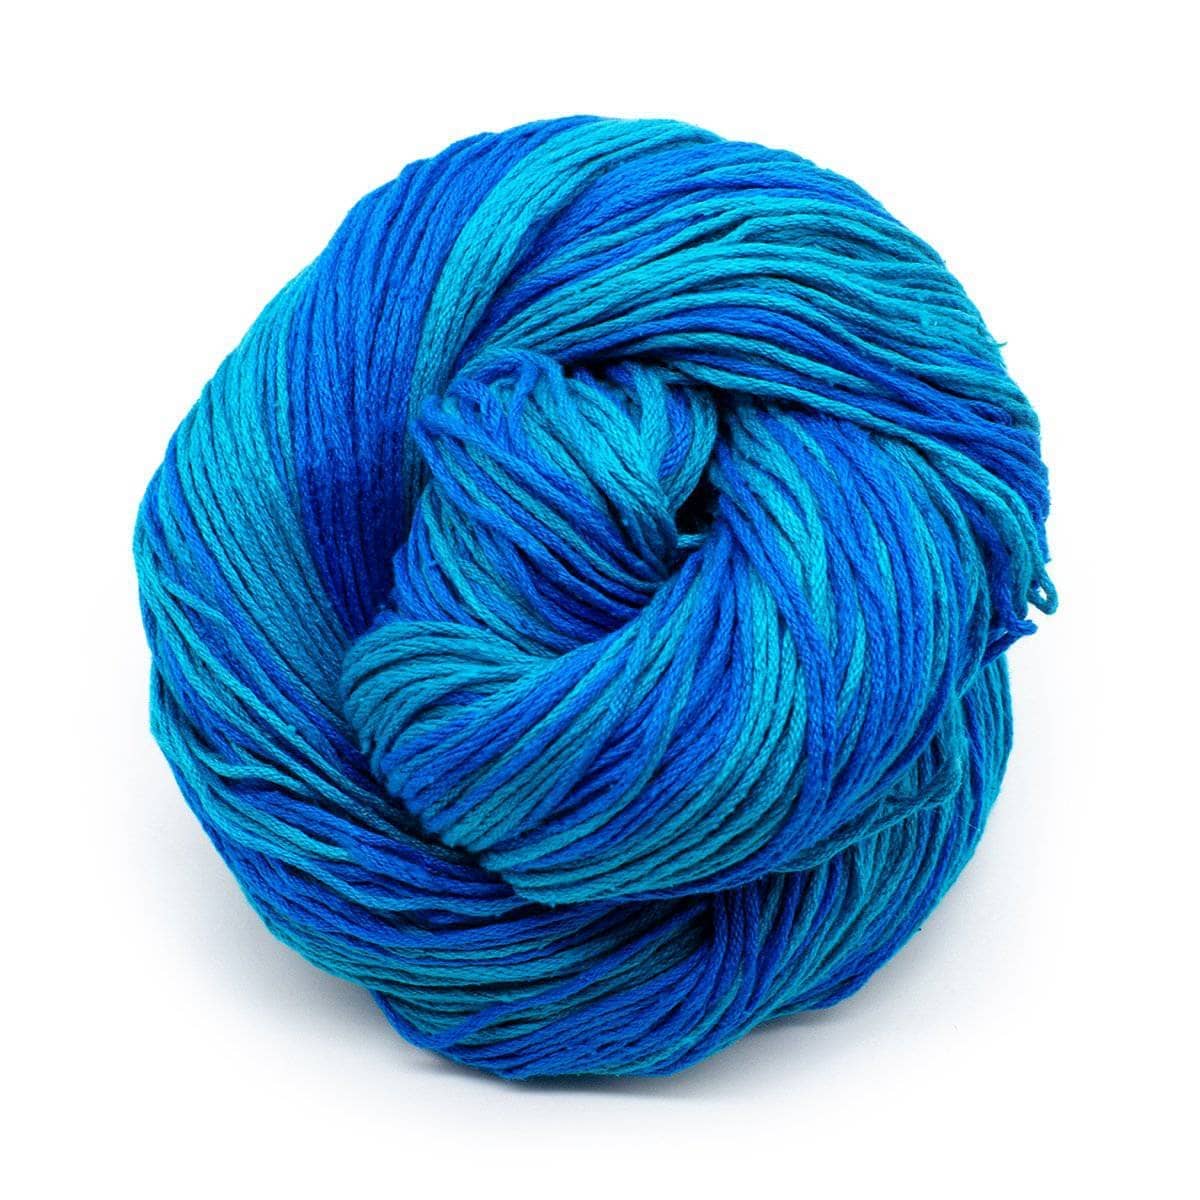 multi shade blue yarn on a white background